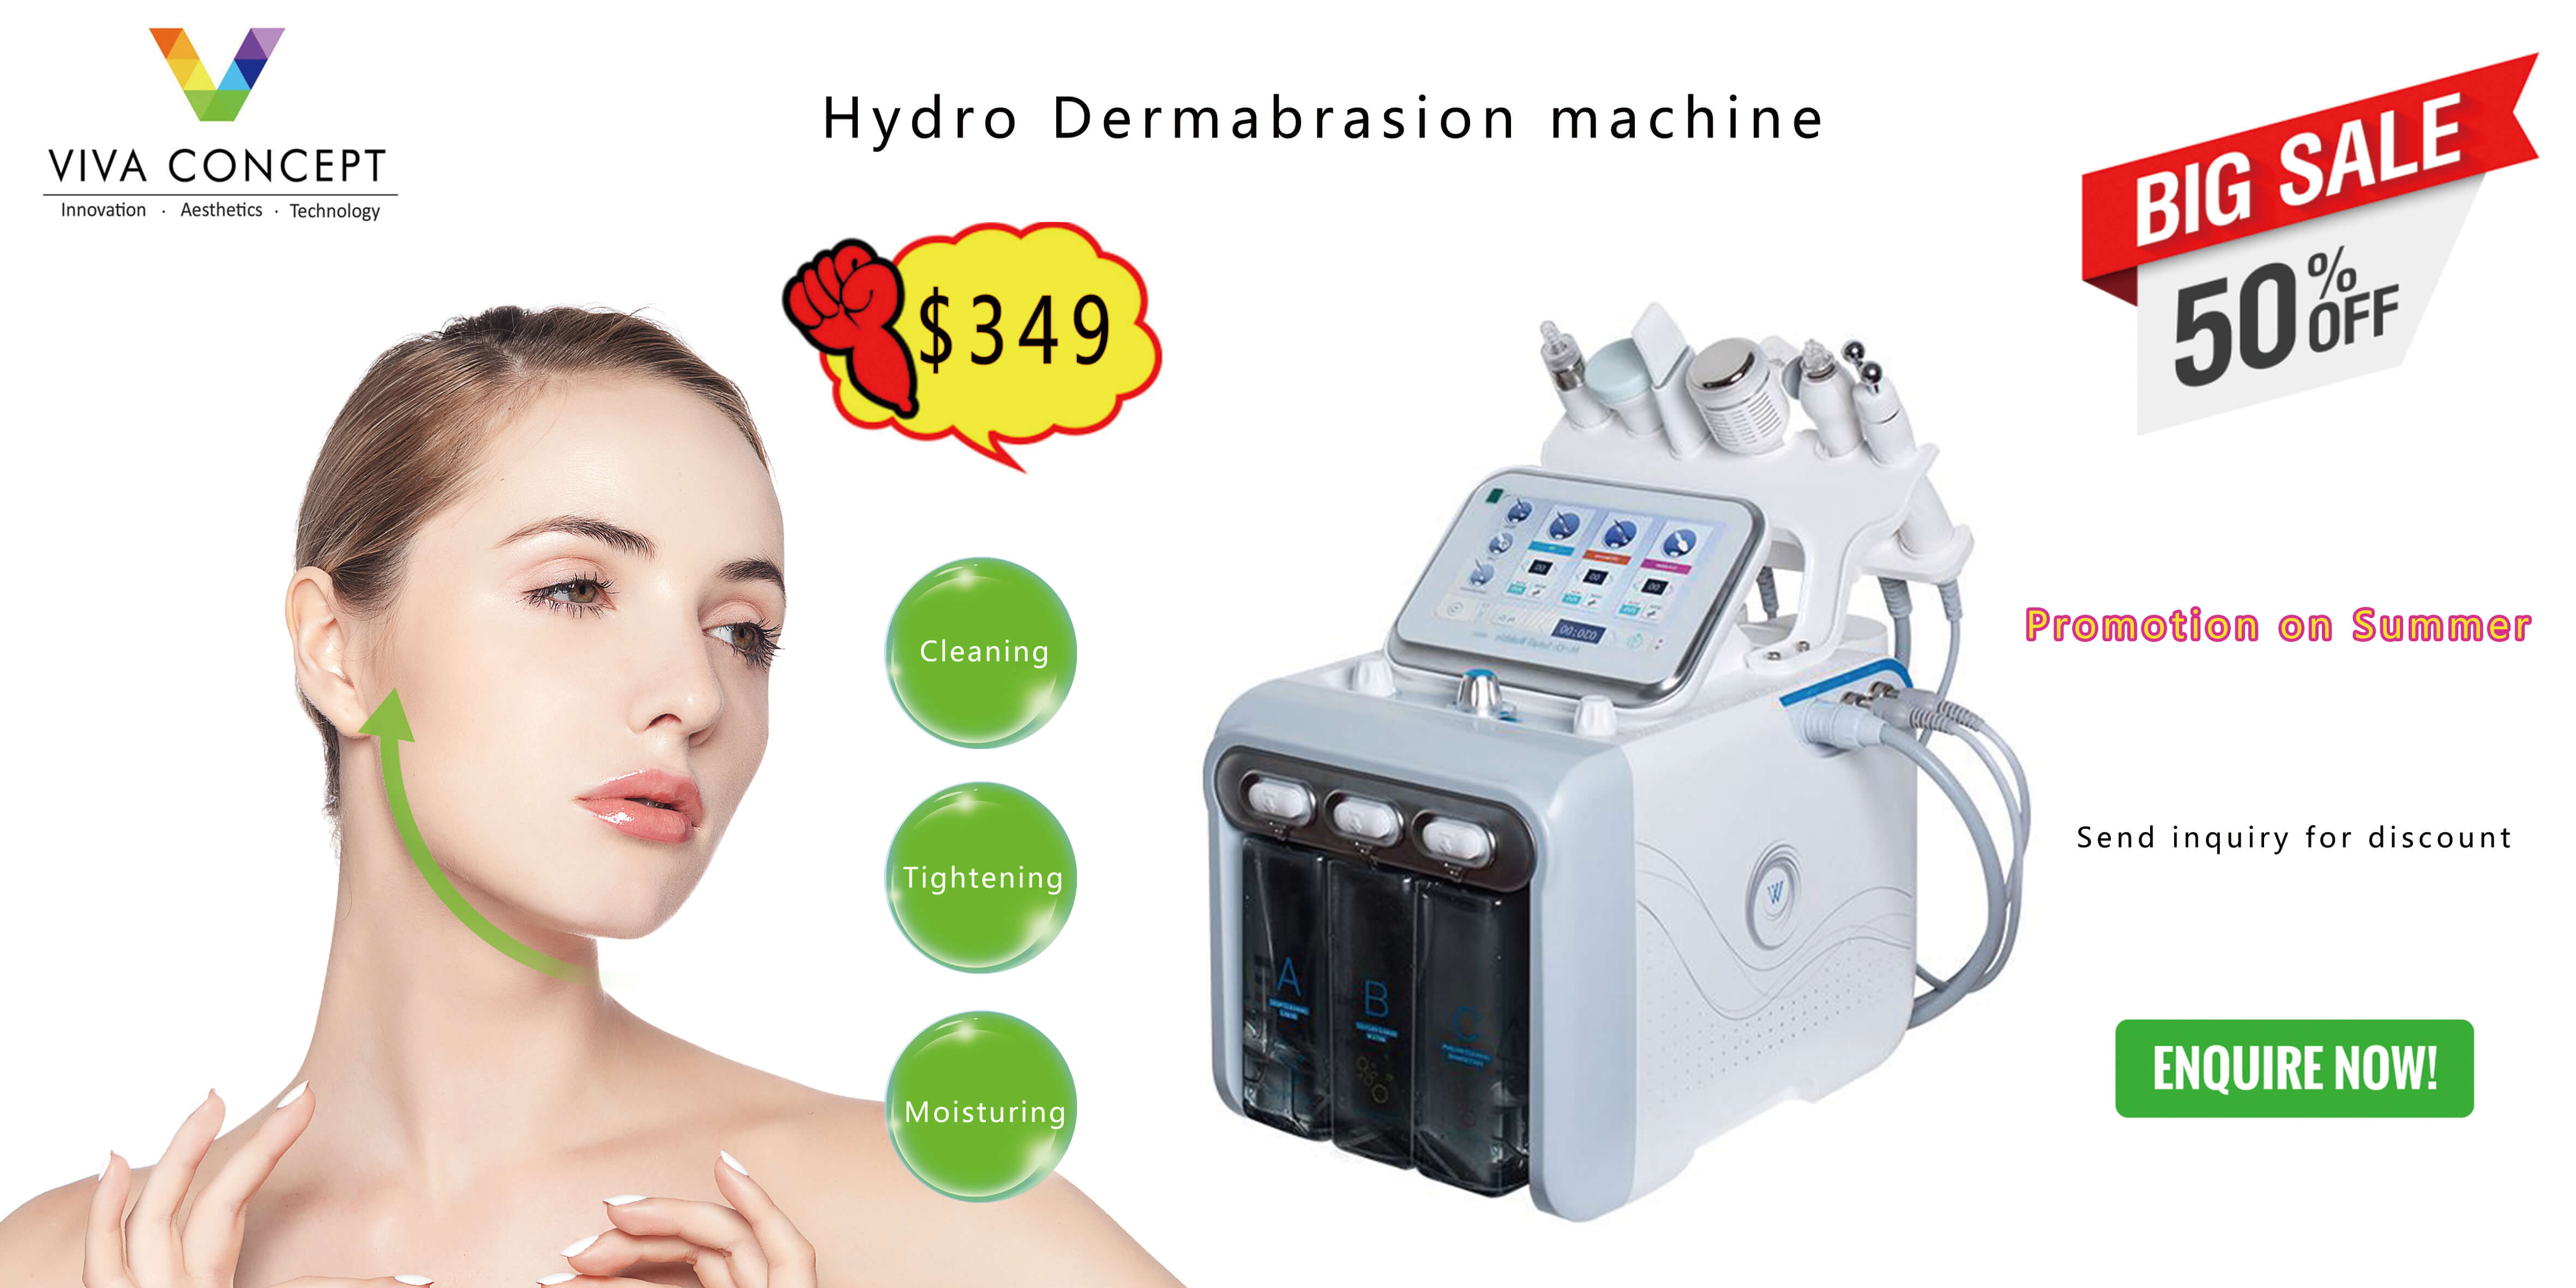 Hydro Dermabrasion machine for sale